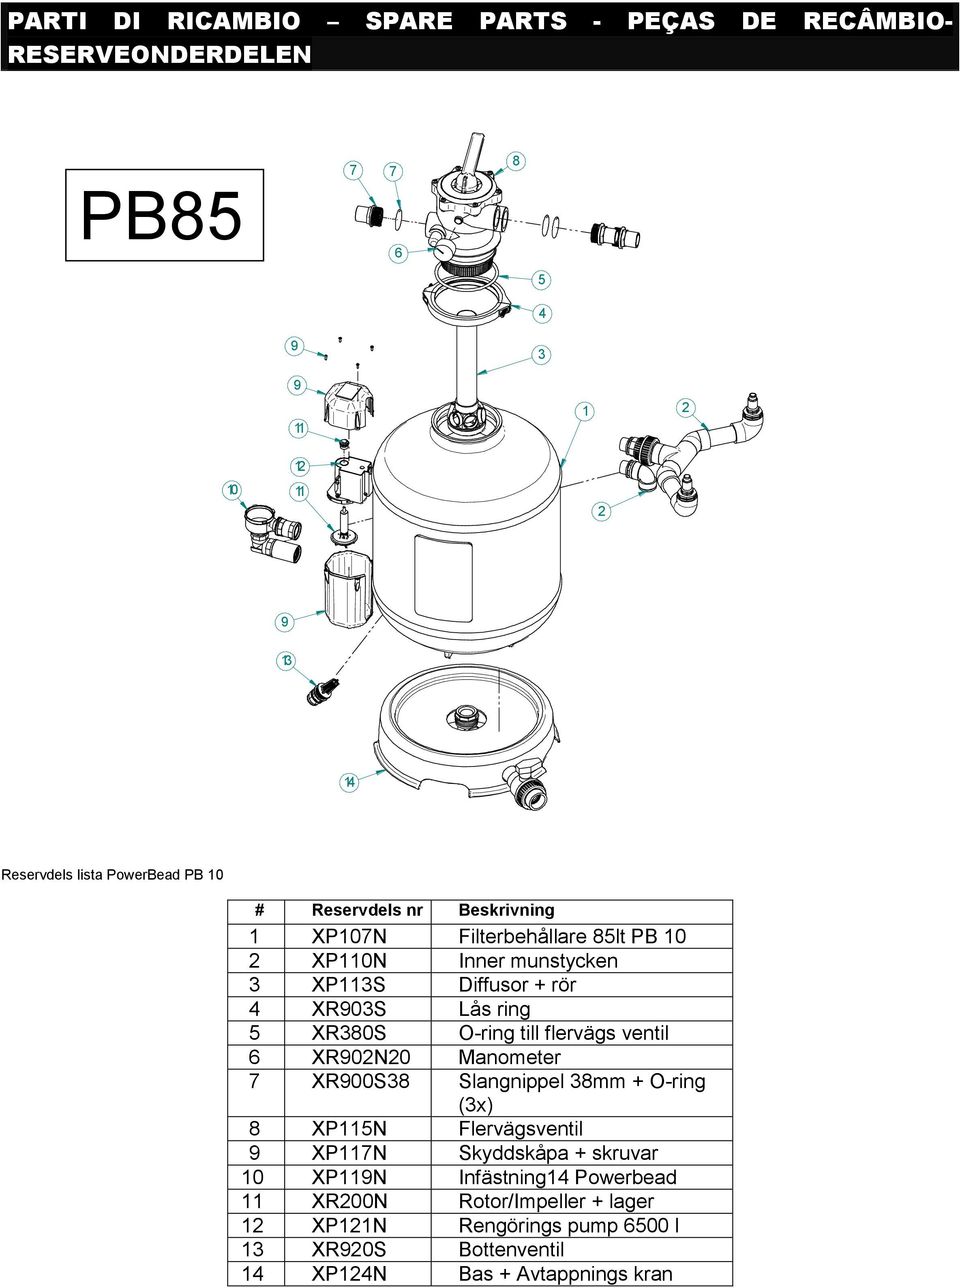 XR380S O-ring till flervägs ventil 6 XR902N20 Manometer 7 XR900S38 Slangnippel 38mm + O-ring (3x) 8 XP5N Flervägsventil 9 XP7N Skyddskåpa +